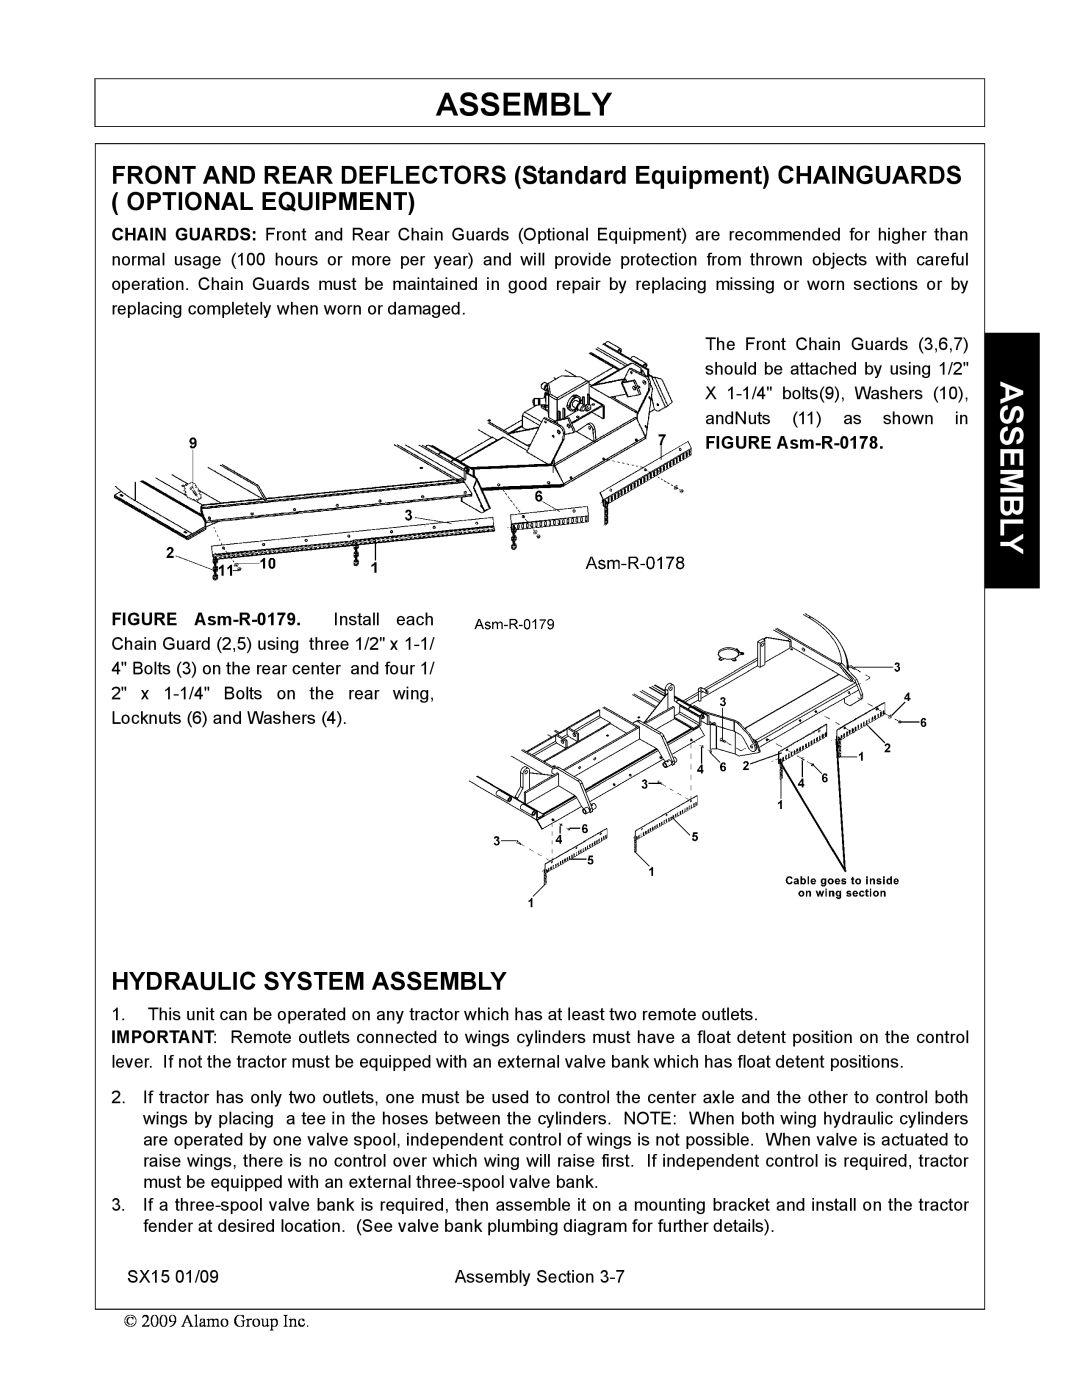 Alamo SX15 manual Hydraulic System Assembly, FIGURE Asm-R-0178 FIGURE Asm-R-0179. Install each 